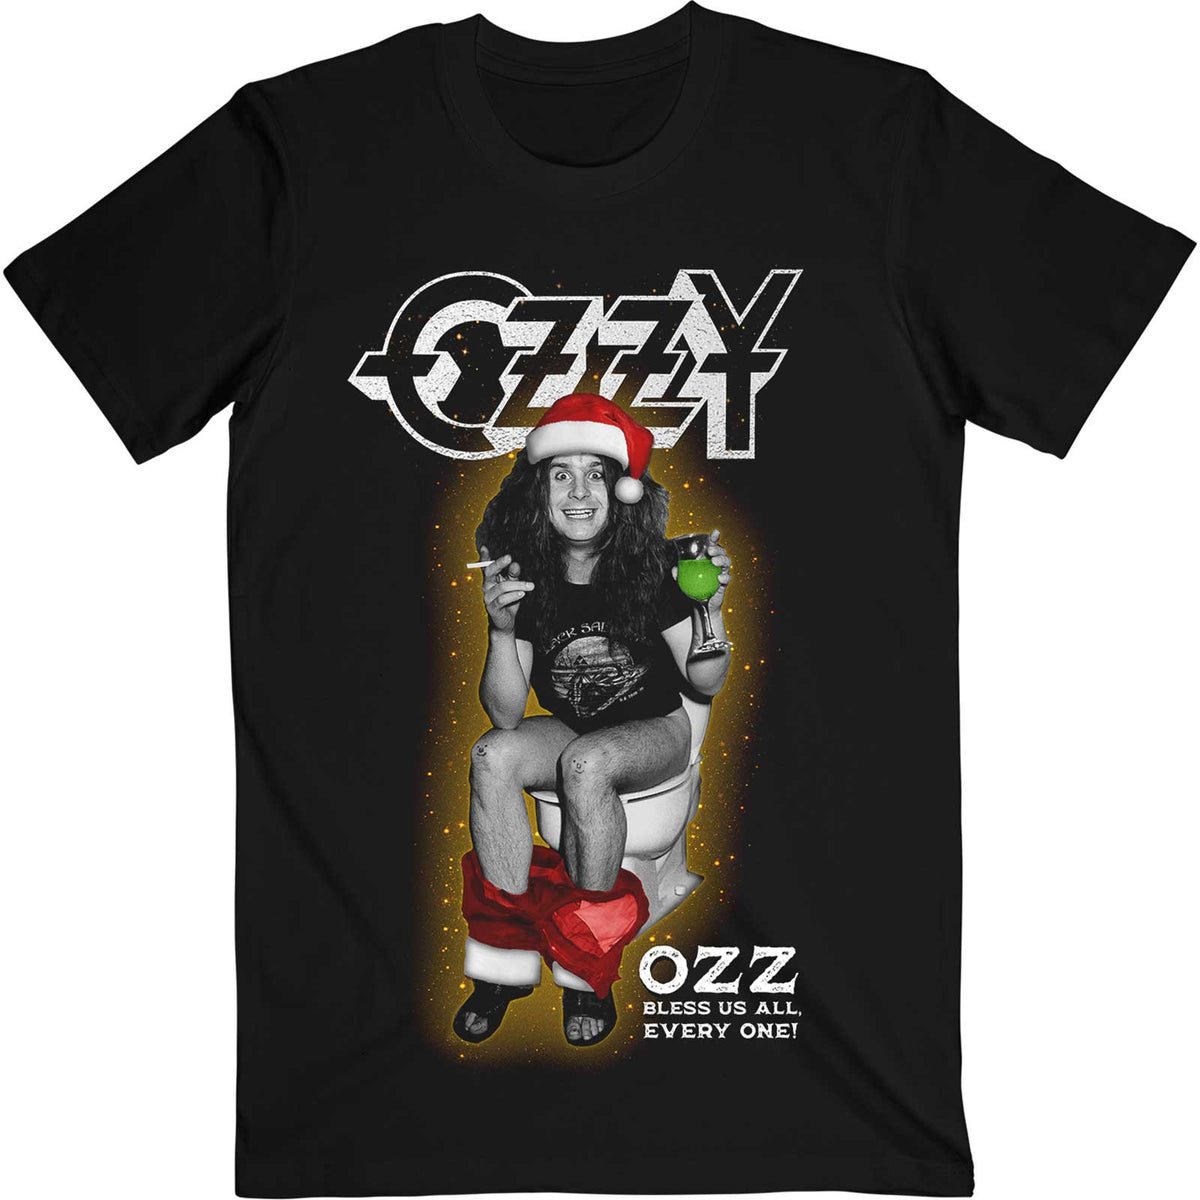 Ozzy Osbourne T-Shirt - Ozz Bless Us All - Official Licensed Design